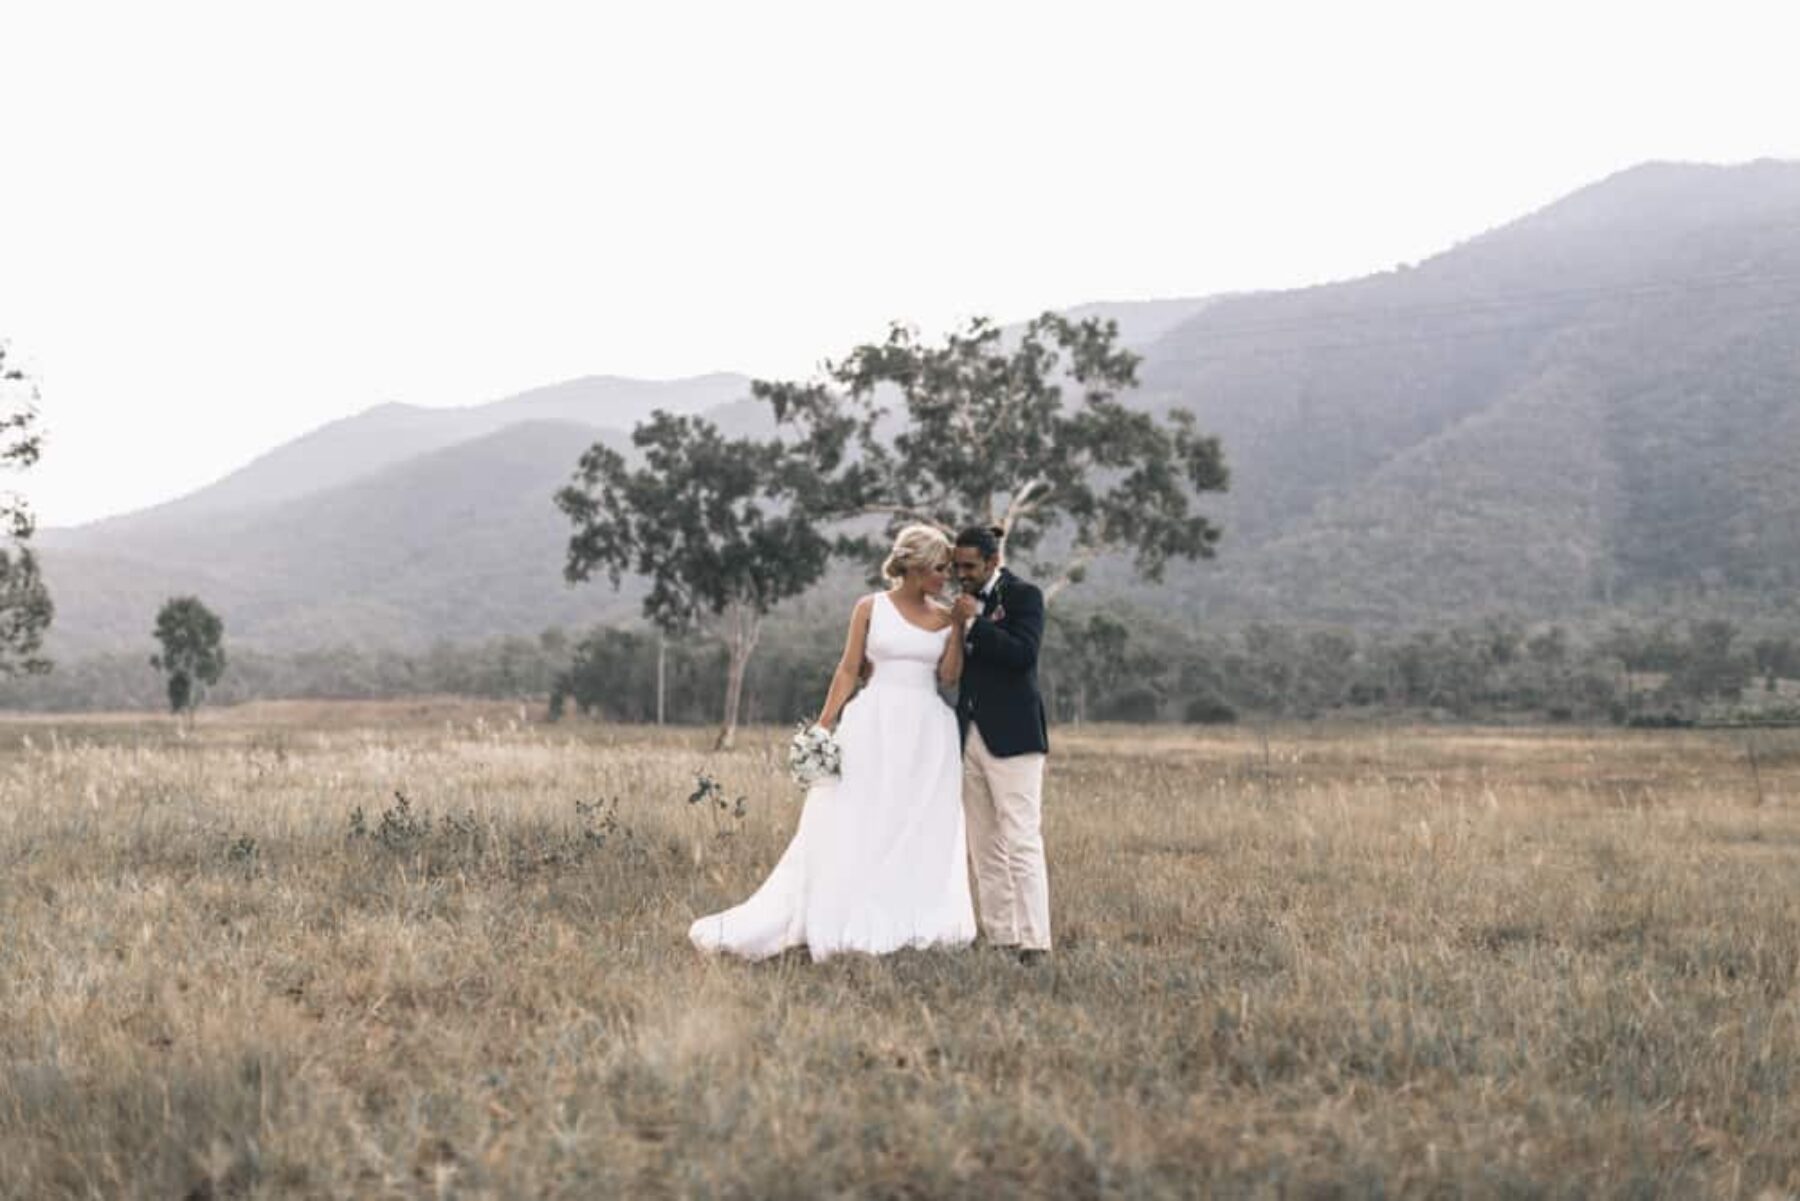 Magical farm wedding, Townsville QLD / Photography by Aleksandar Jason